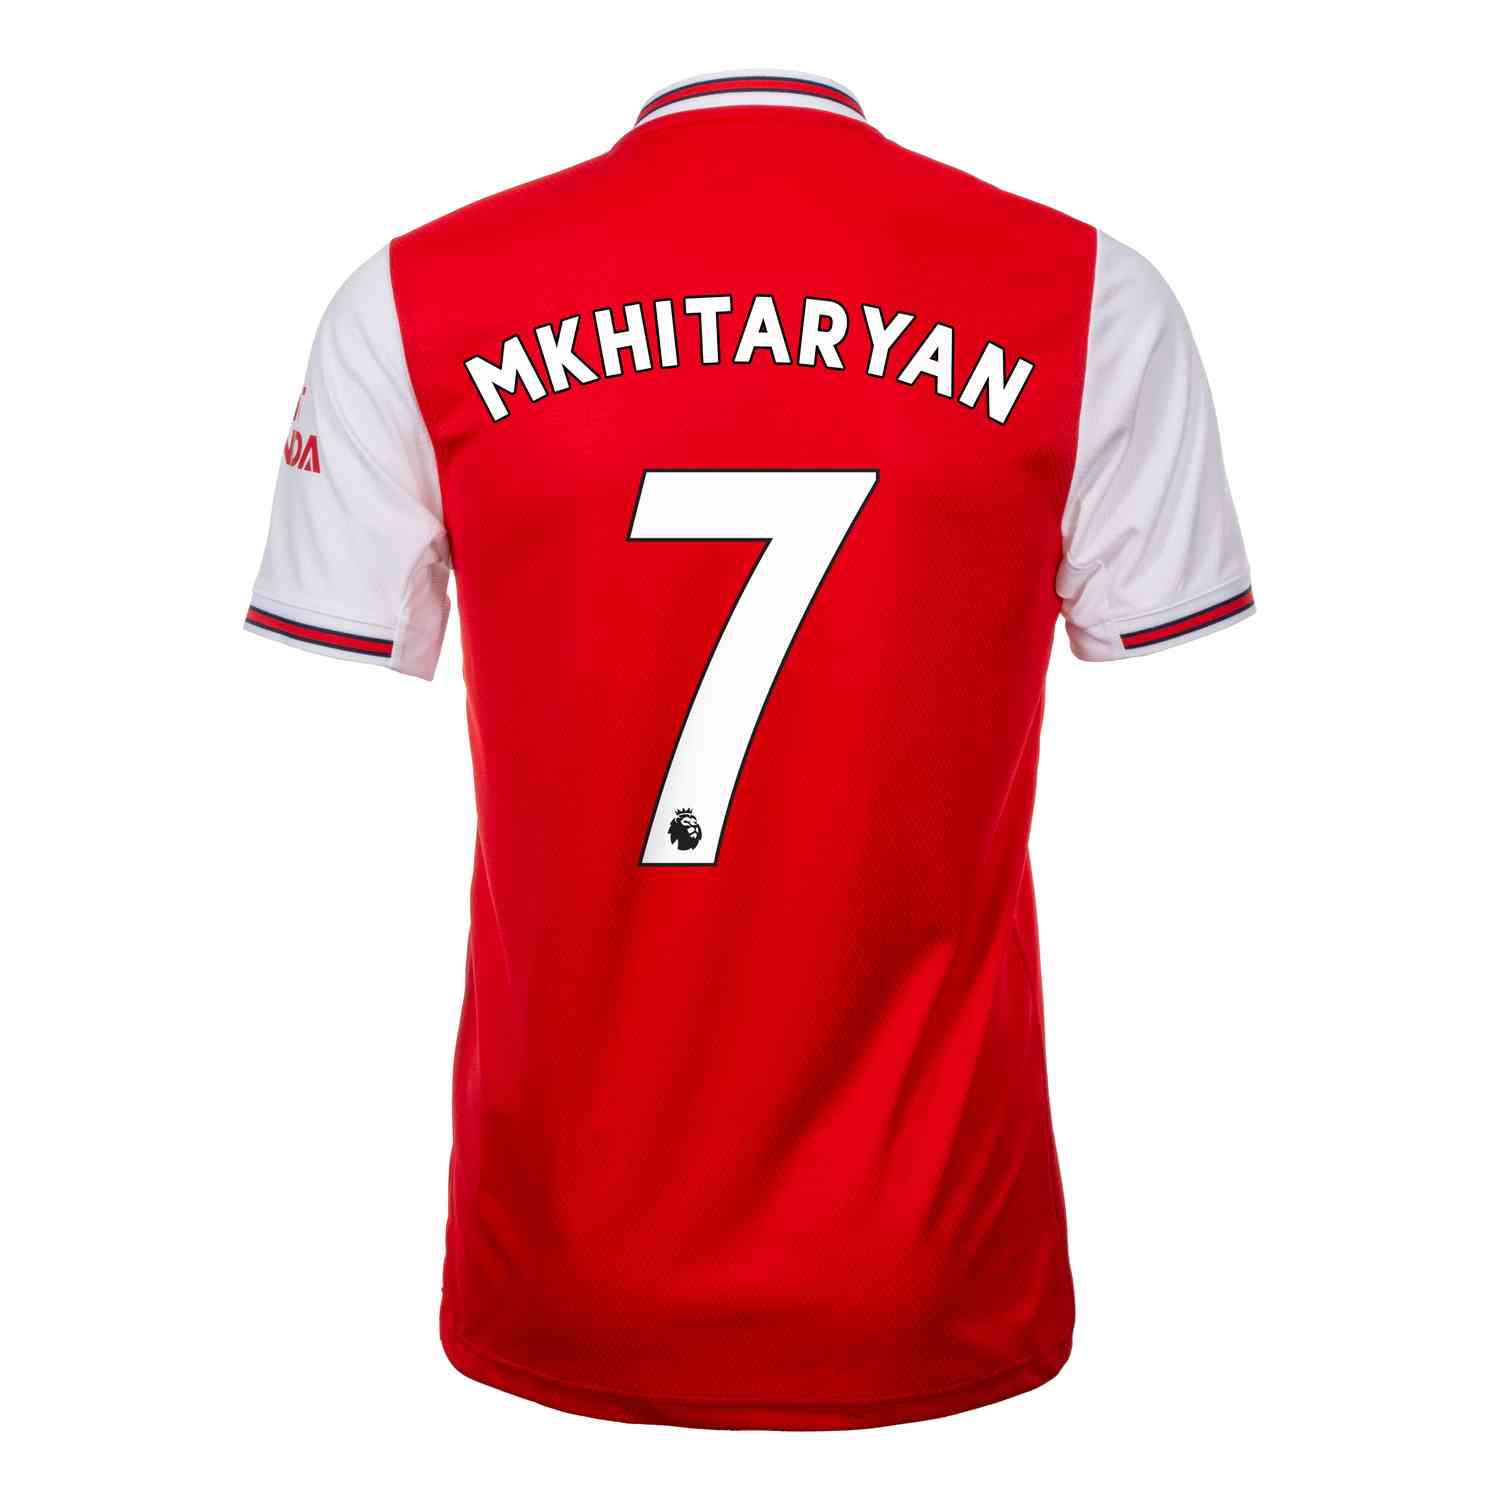 Why Henrikh Mkhitaryan will not be wearing Arsenal's number 7